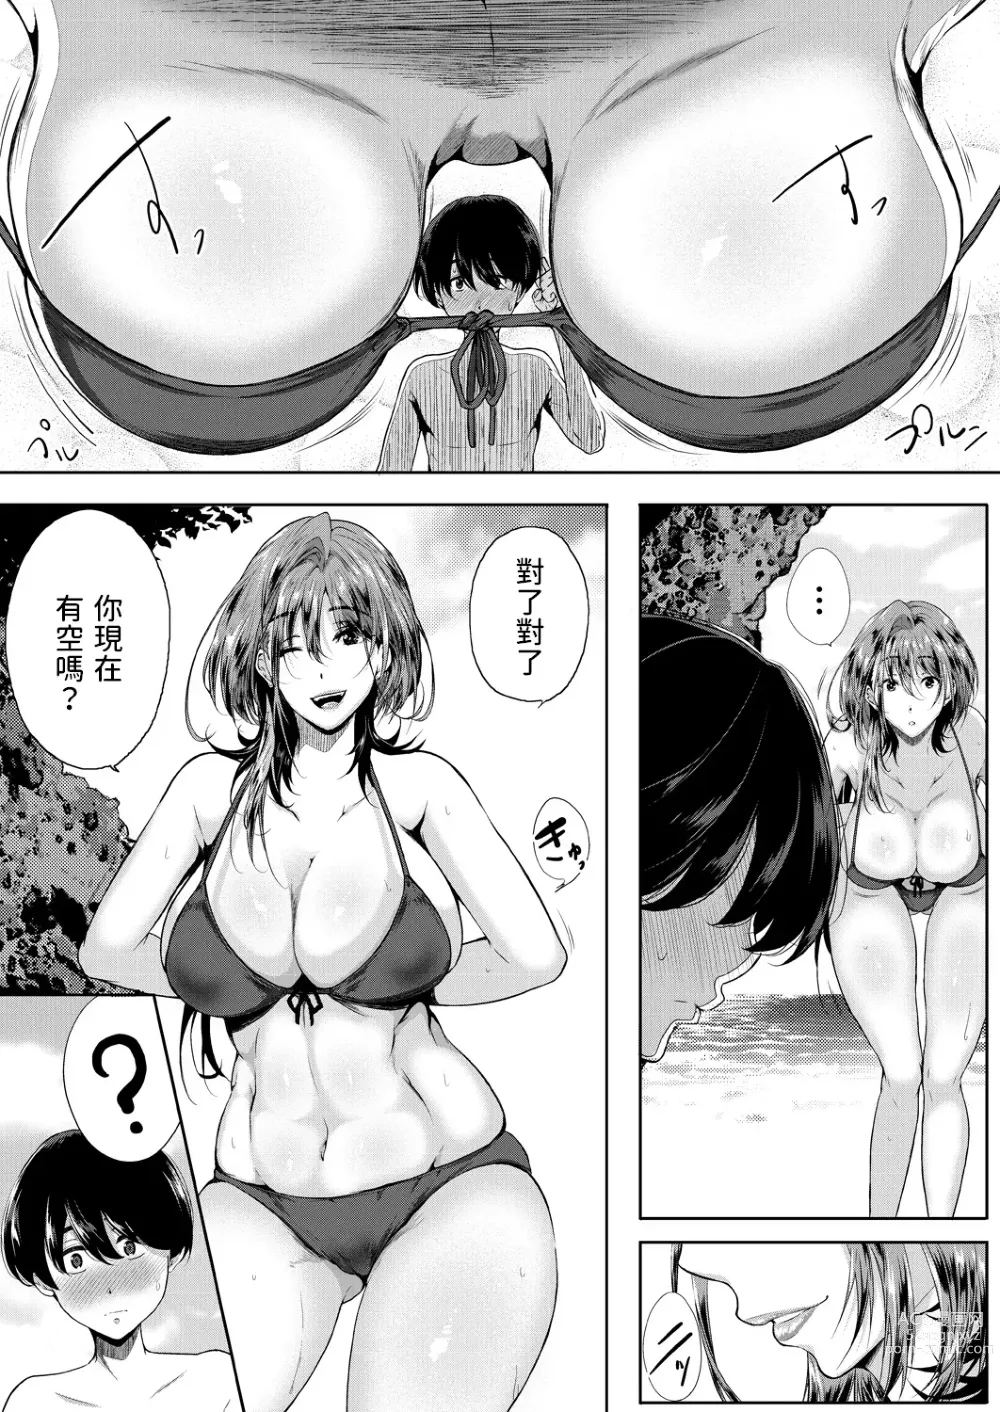 Page 5 of manga Strawberry Mermaid